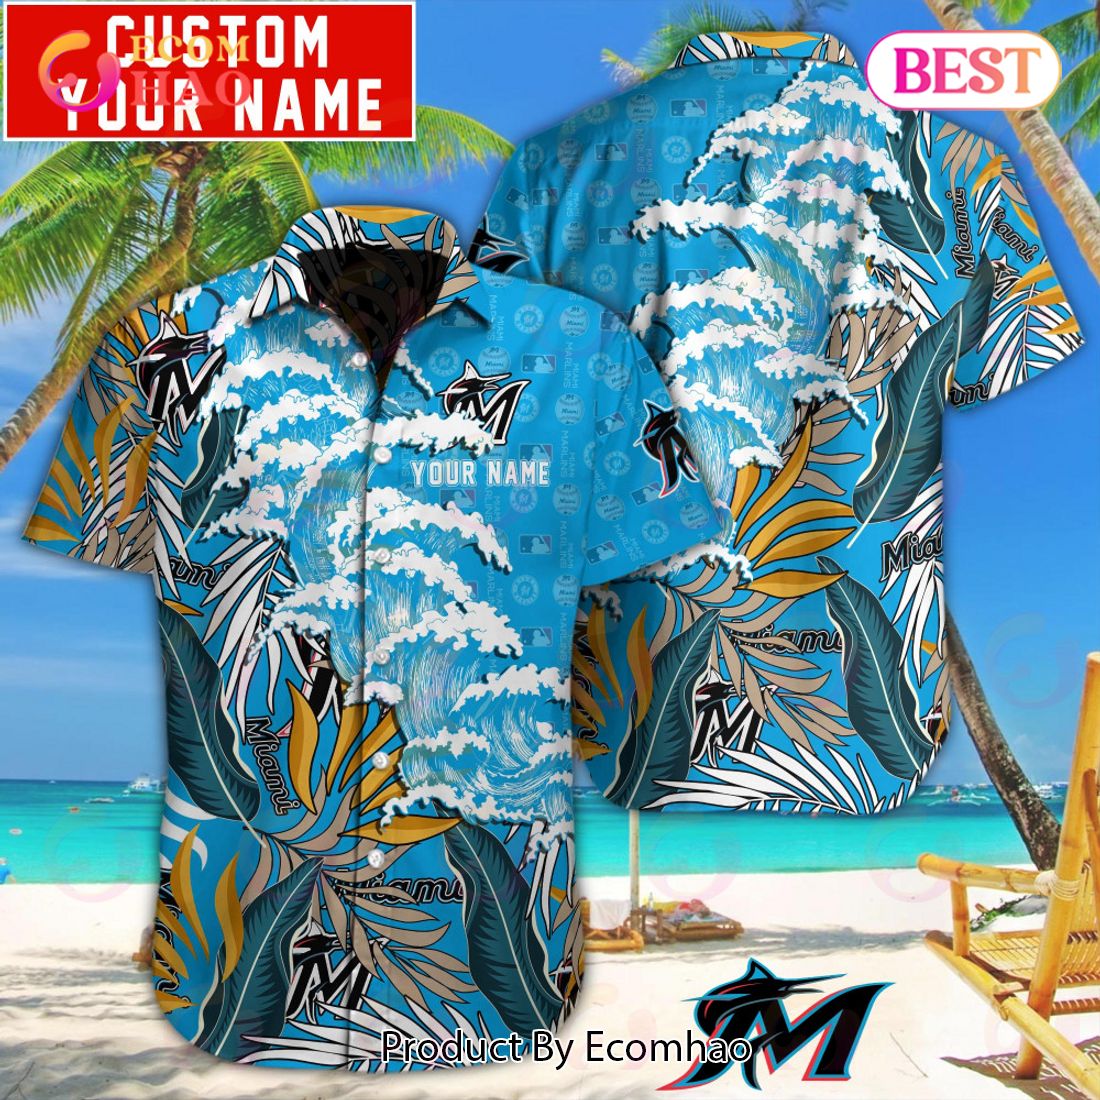 MLB Miami Marlins Logo Hawaii Baseball Jersey Shirt For Fans - Freedomdesign